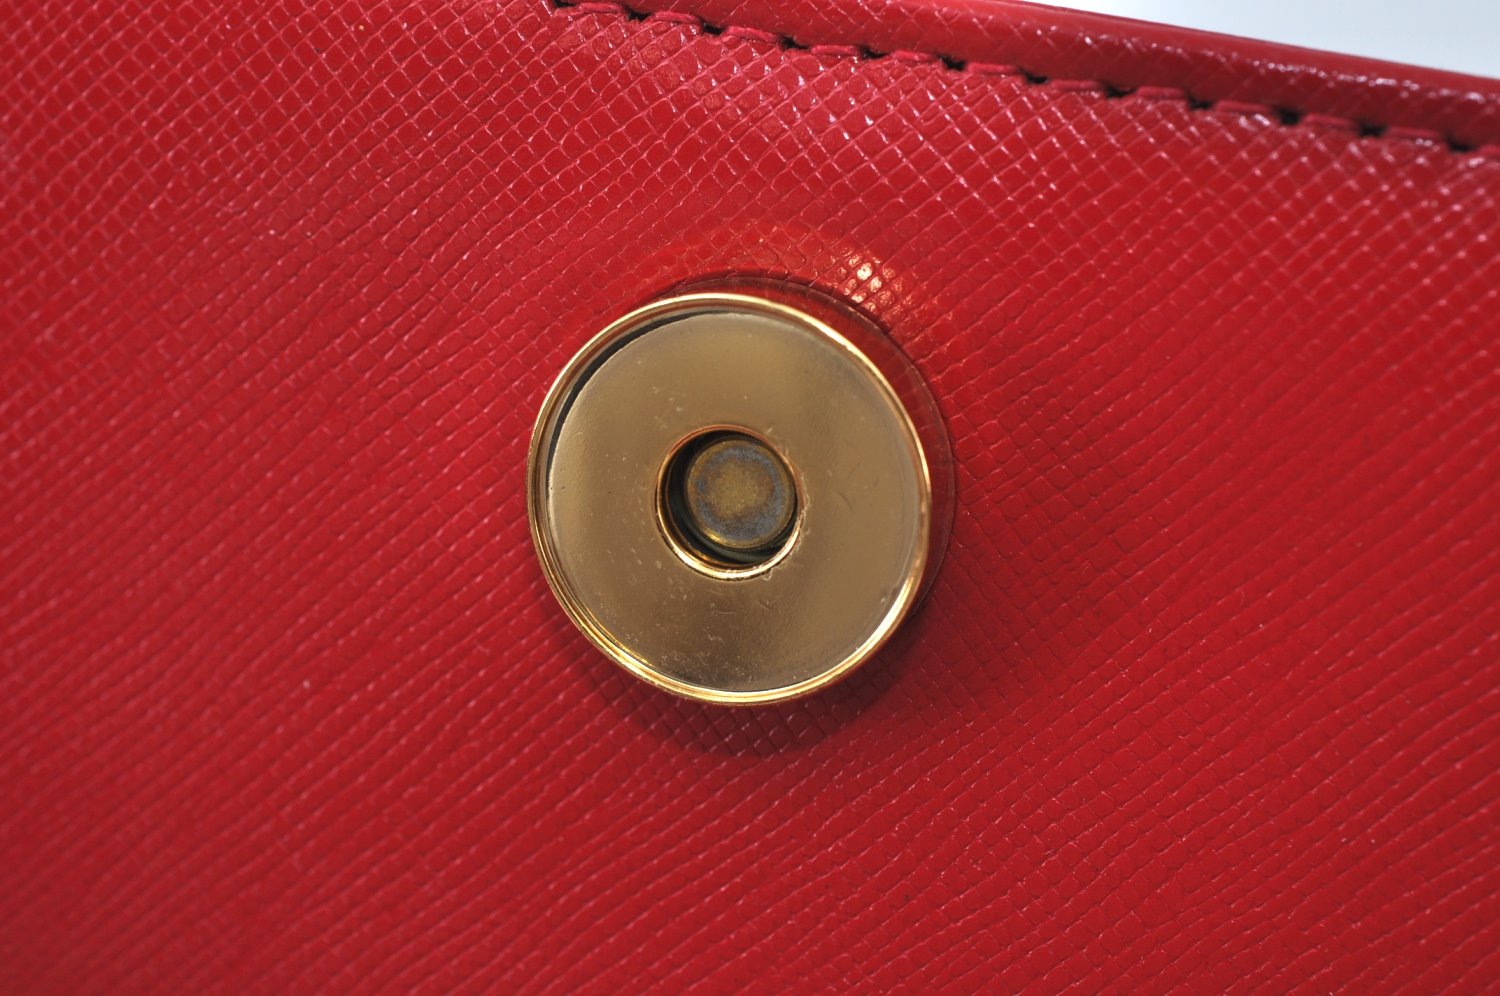 Authentic Gianni Versace Sunburst Leather Shoulder Hand Bag Purse Red K9274